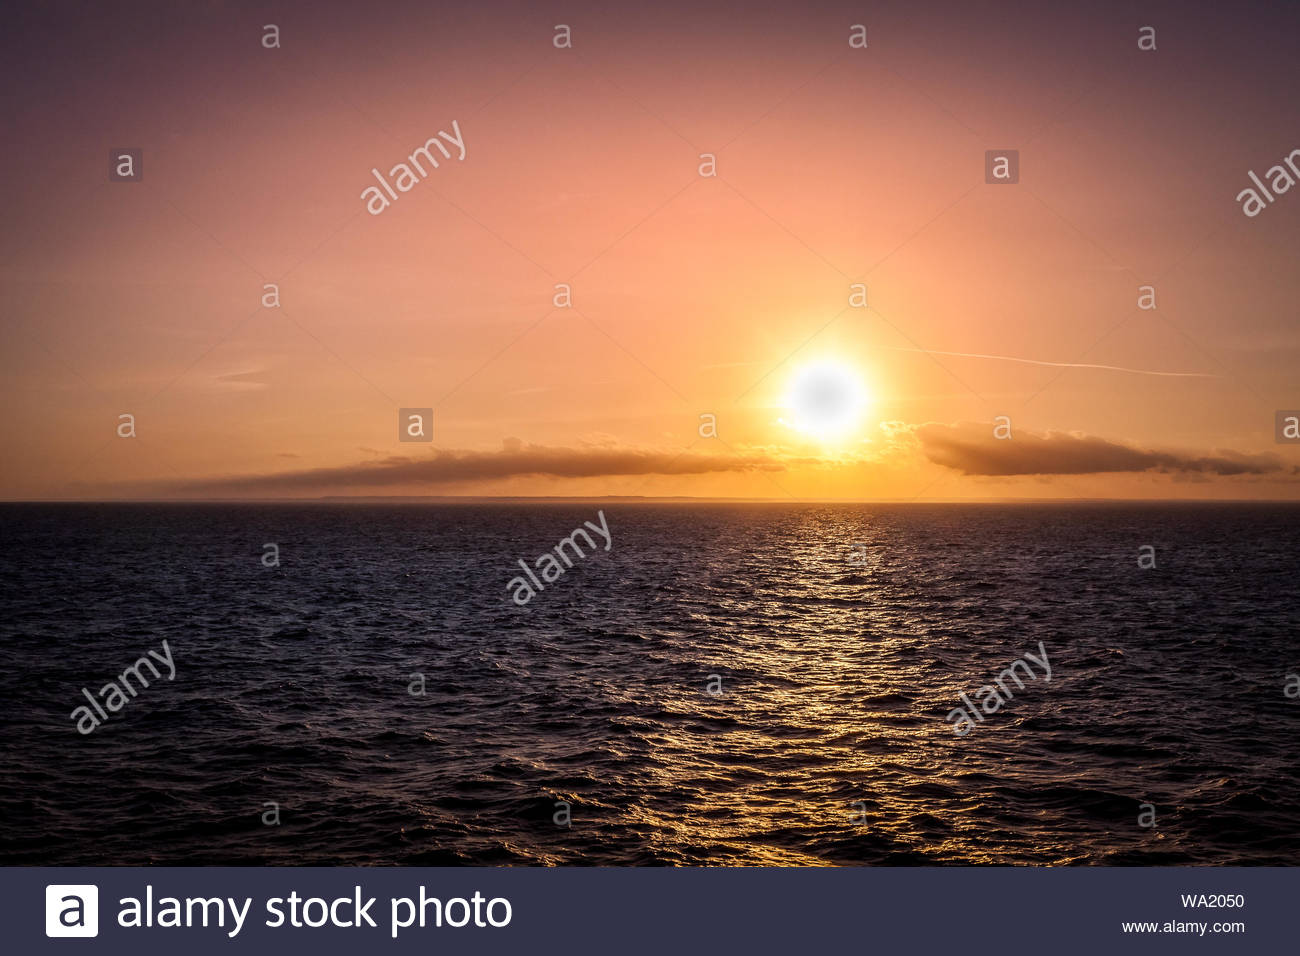 Sunset Behind The Horizon On Sea With Italian Coastline